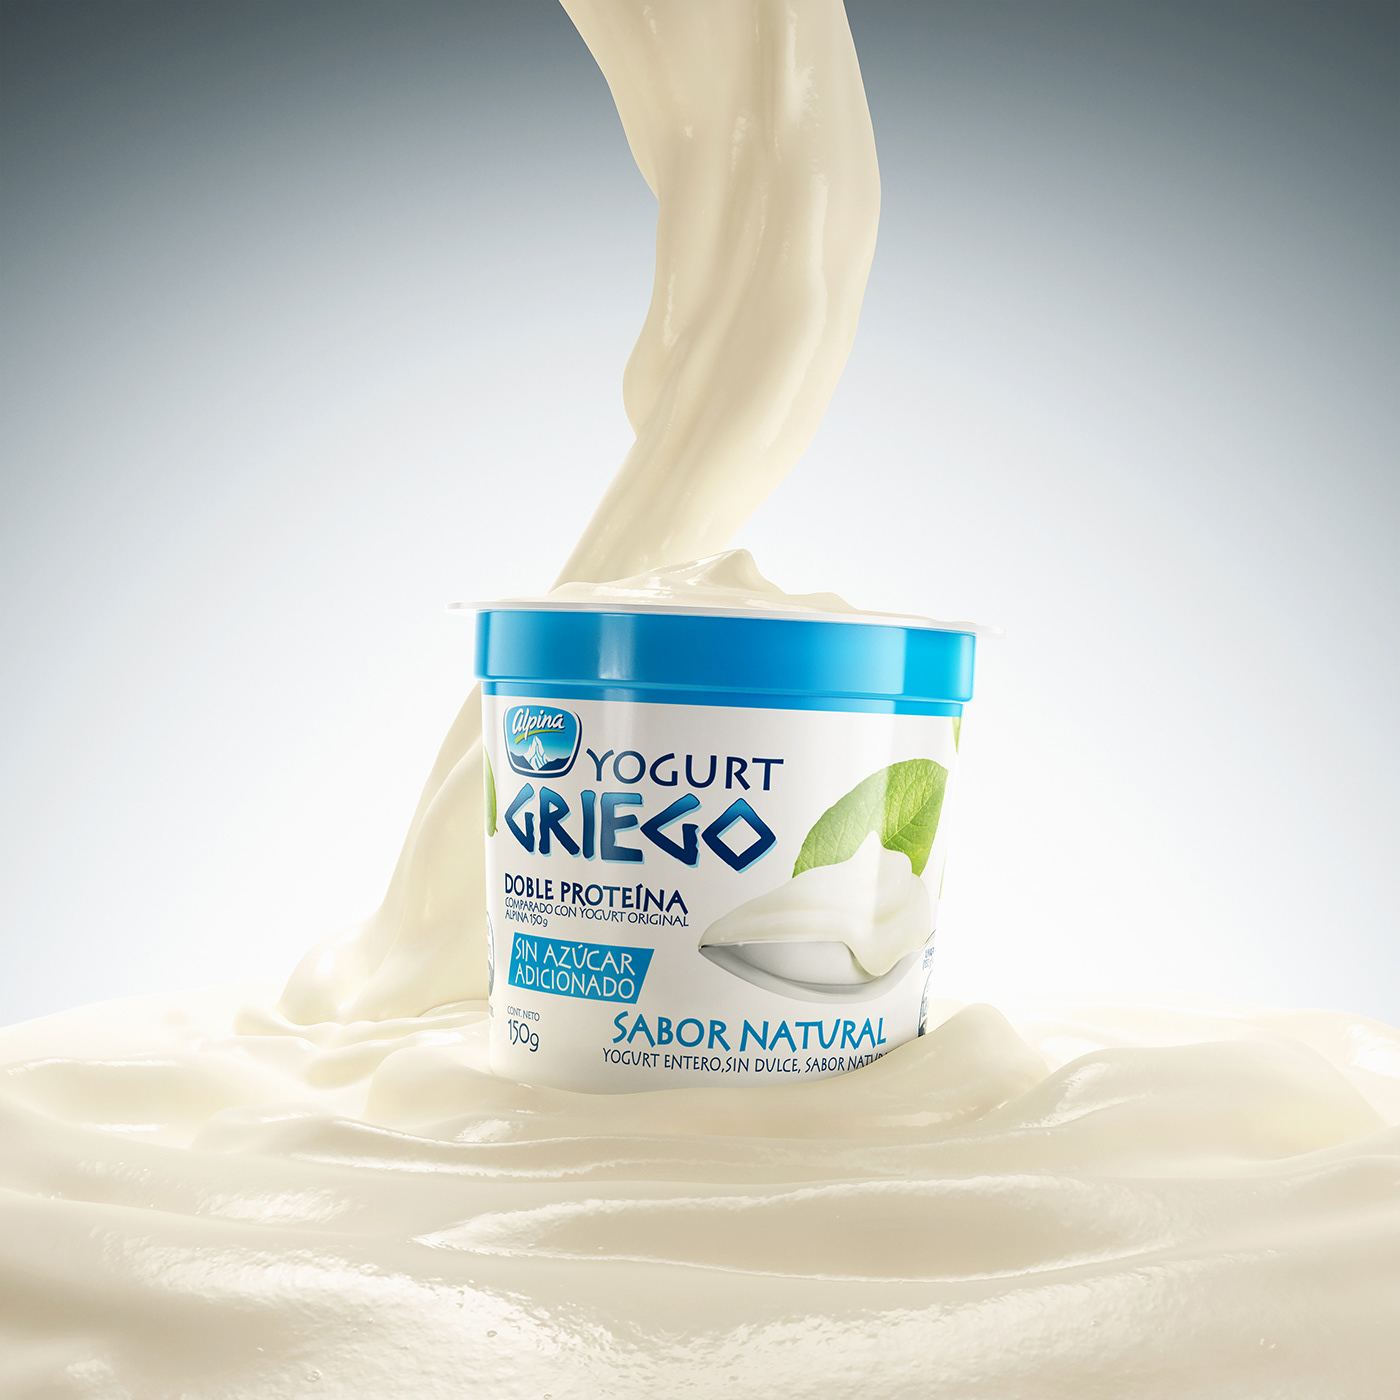 alpina cgi 3d modelado 3d splash yogurt yogurt griego